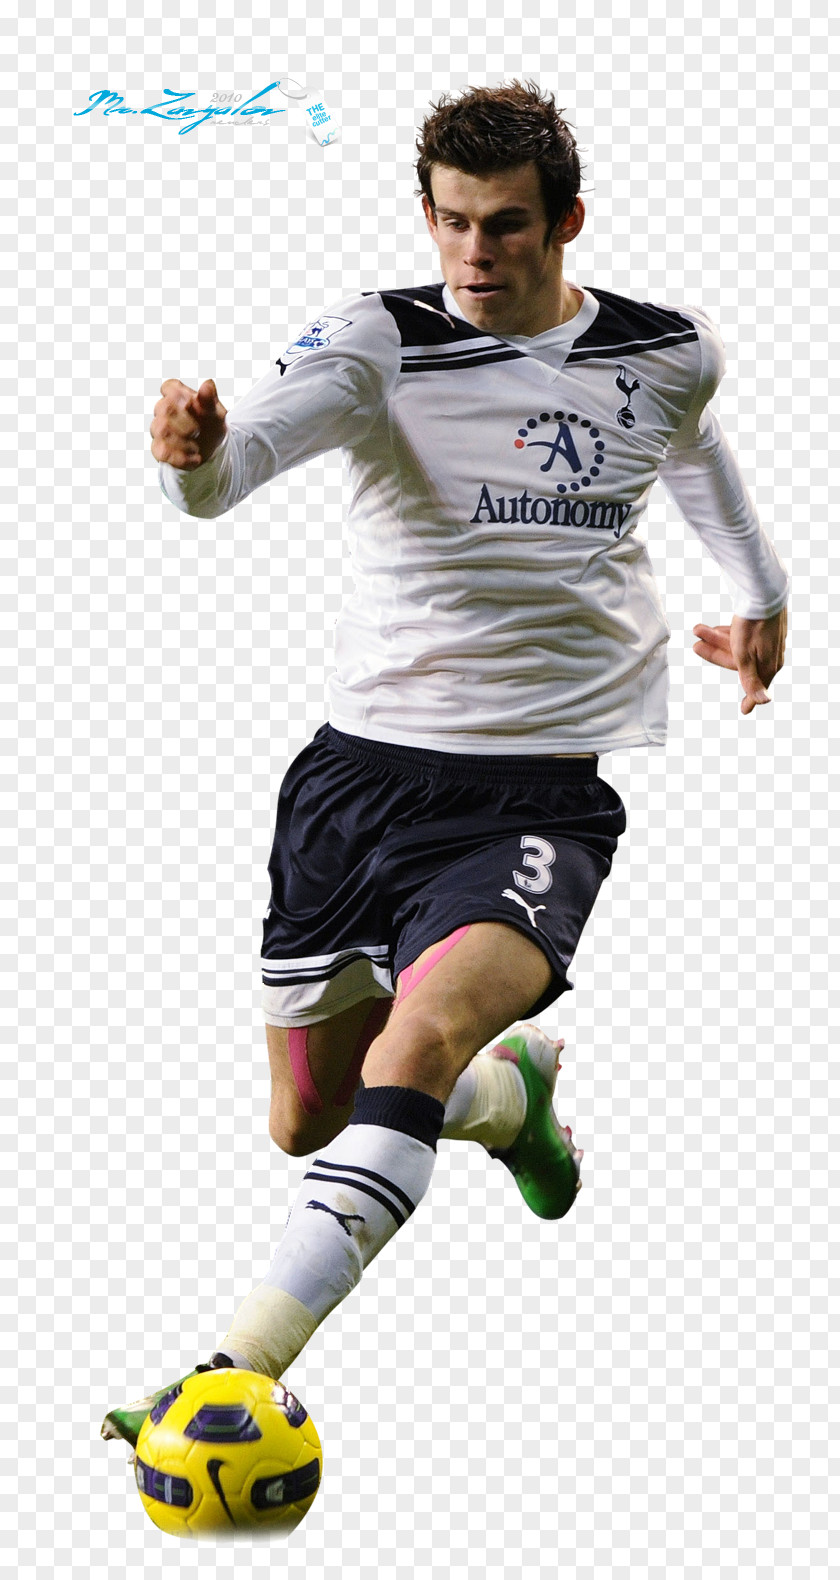 Football Players Gareth Bale Tottenham Hotspur F.C. Real Madrid C.F. 2014 UEFA Champions League Final Player PNG